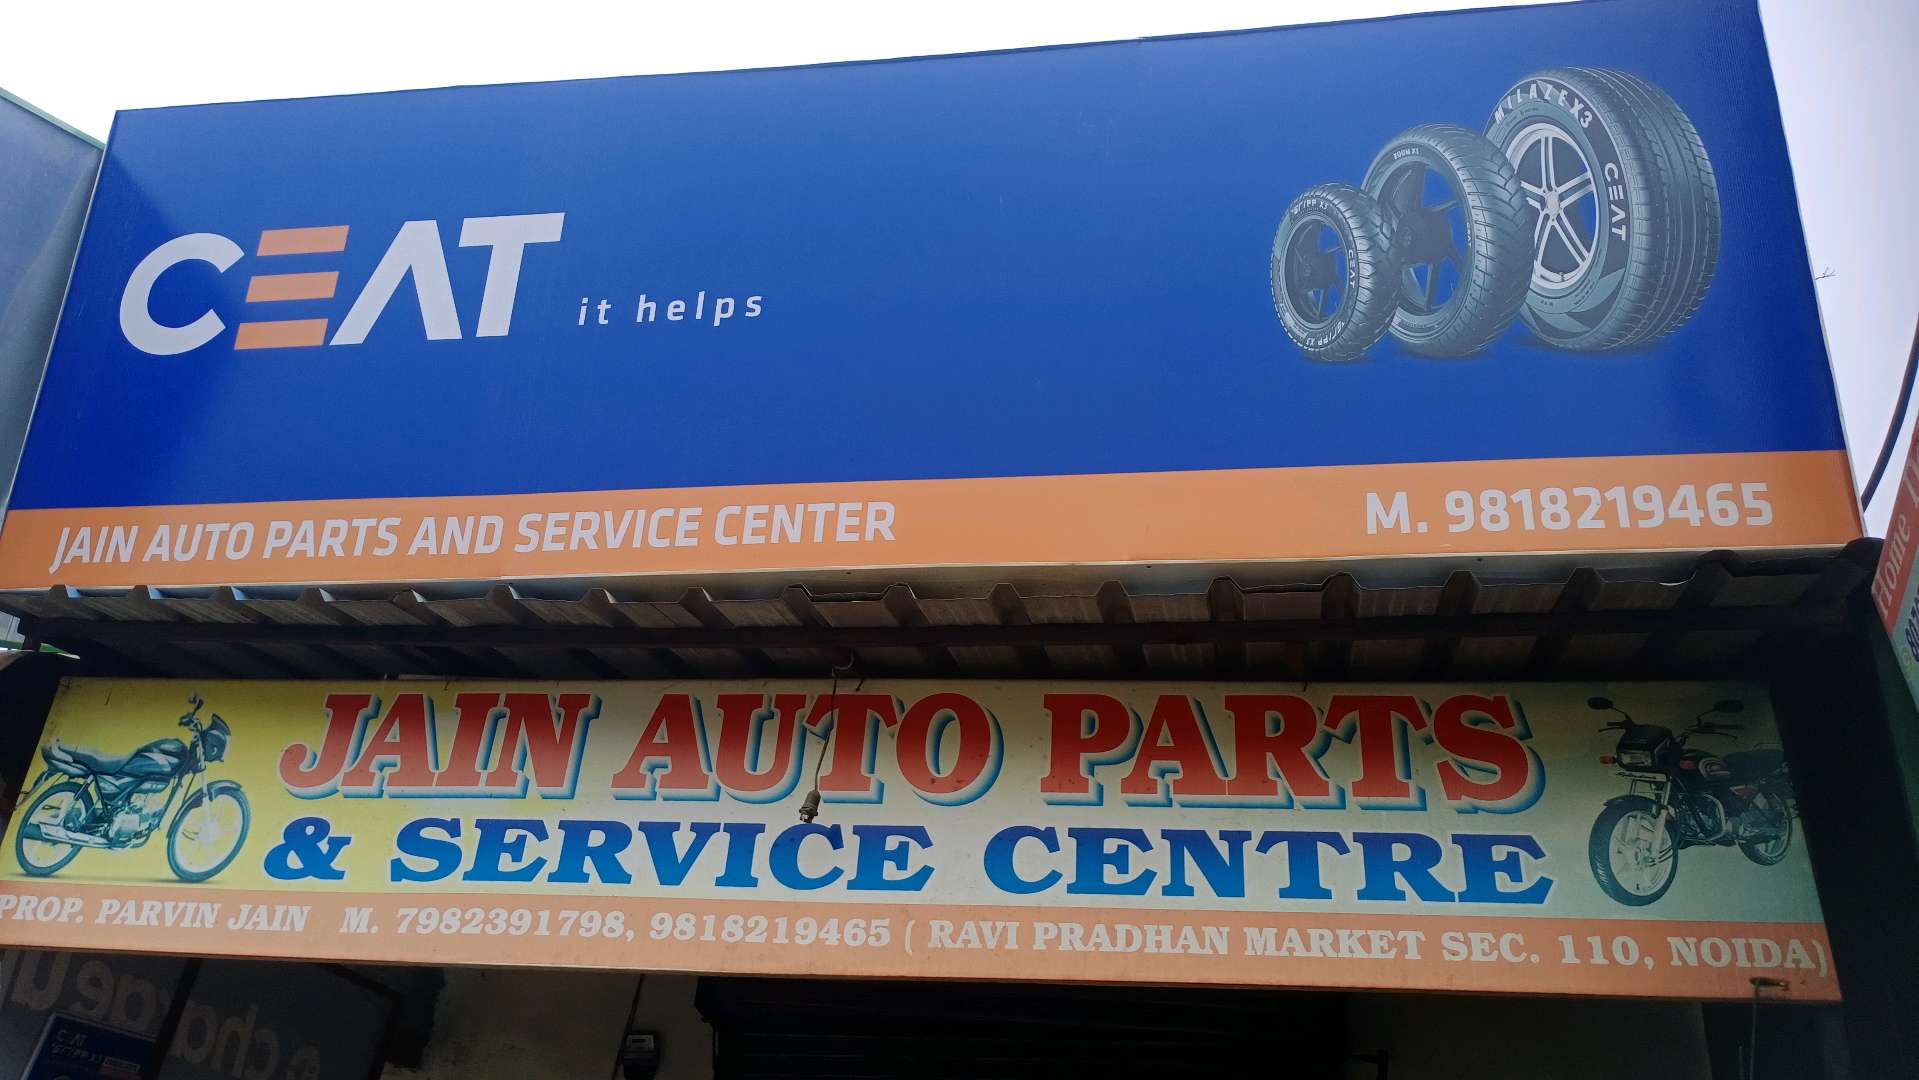 Jain Auto Parts & Service Center